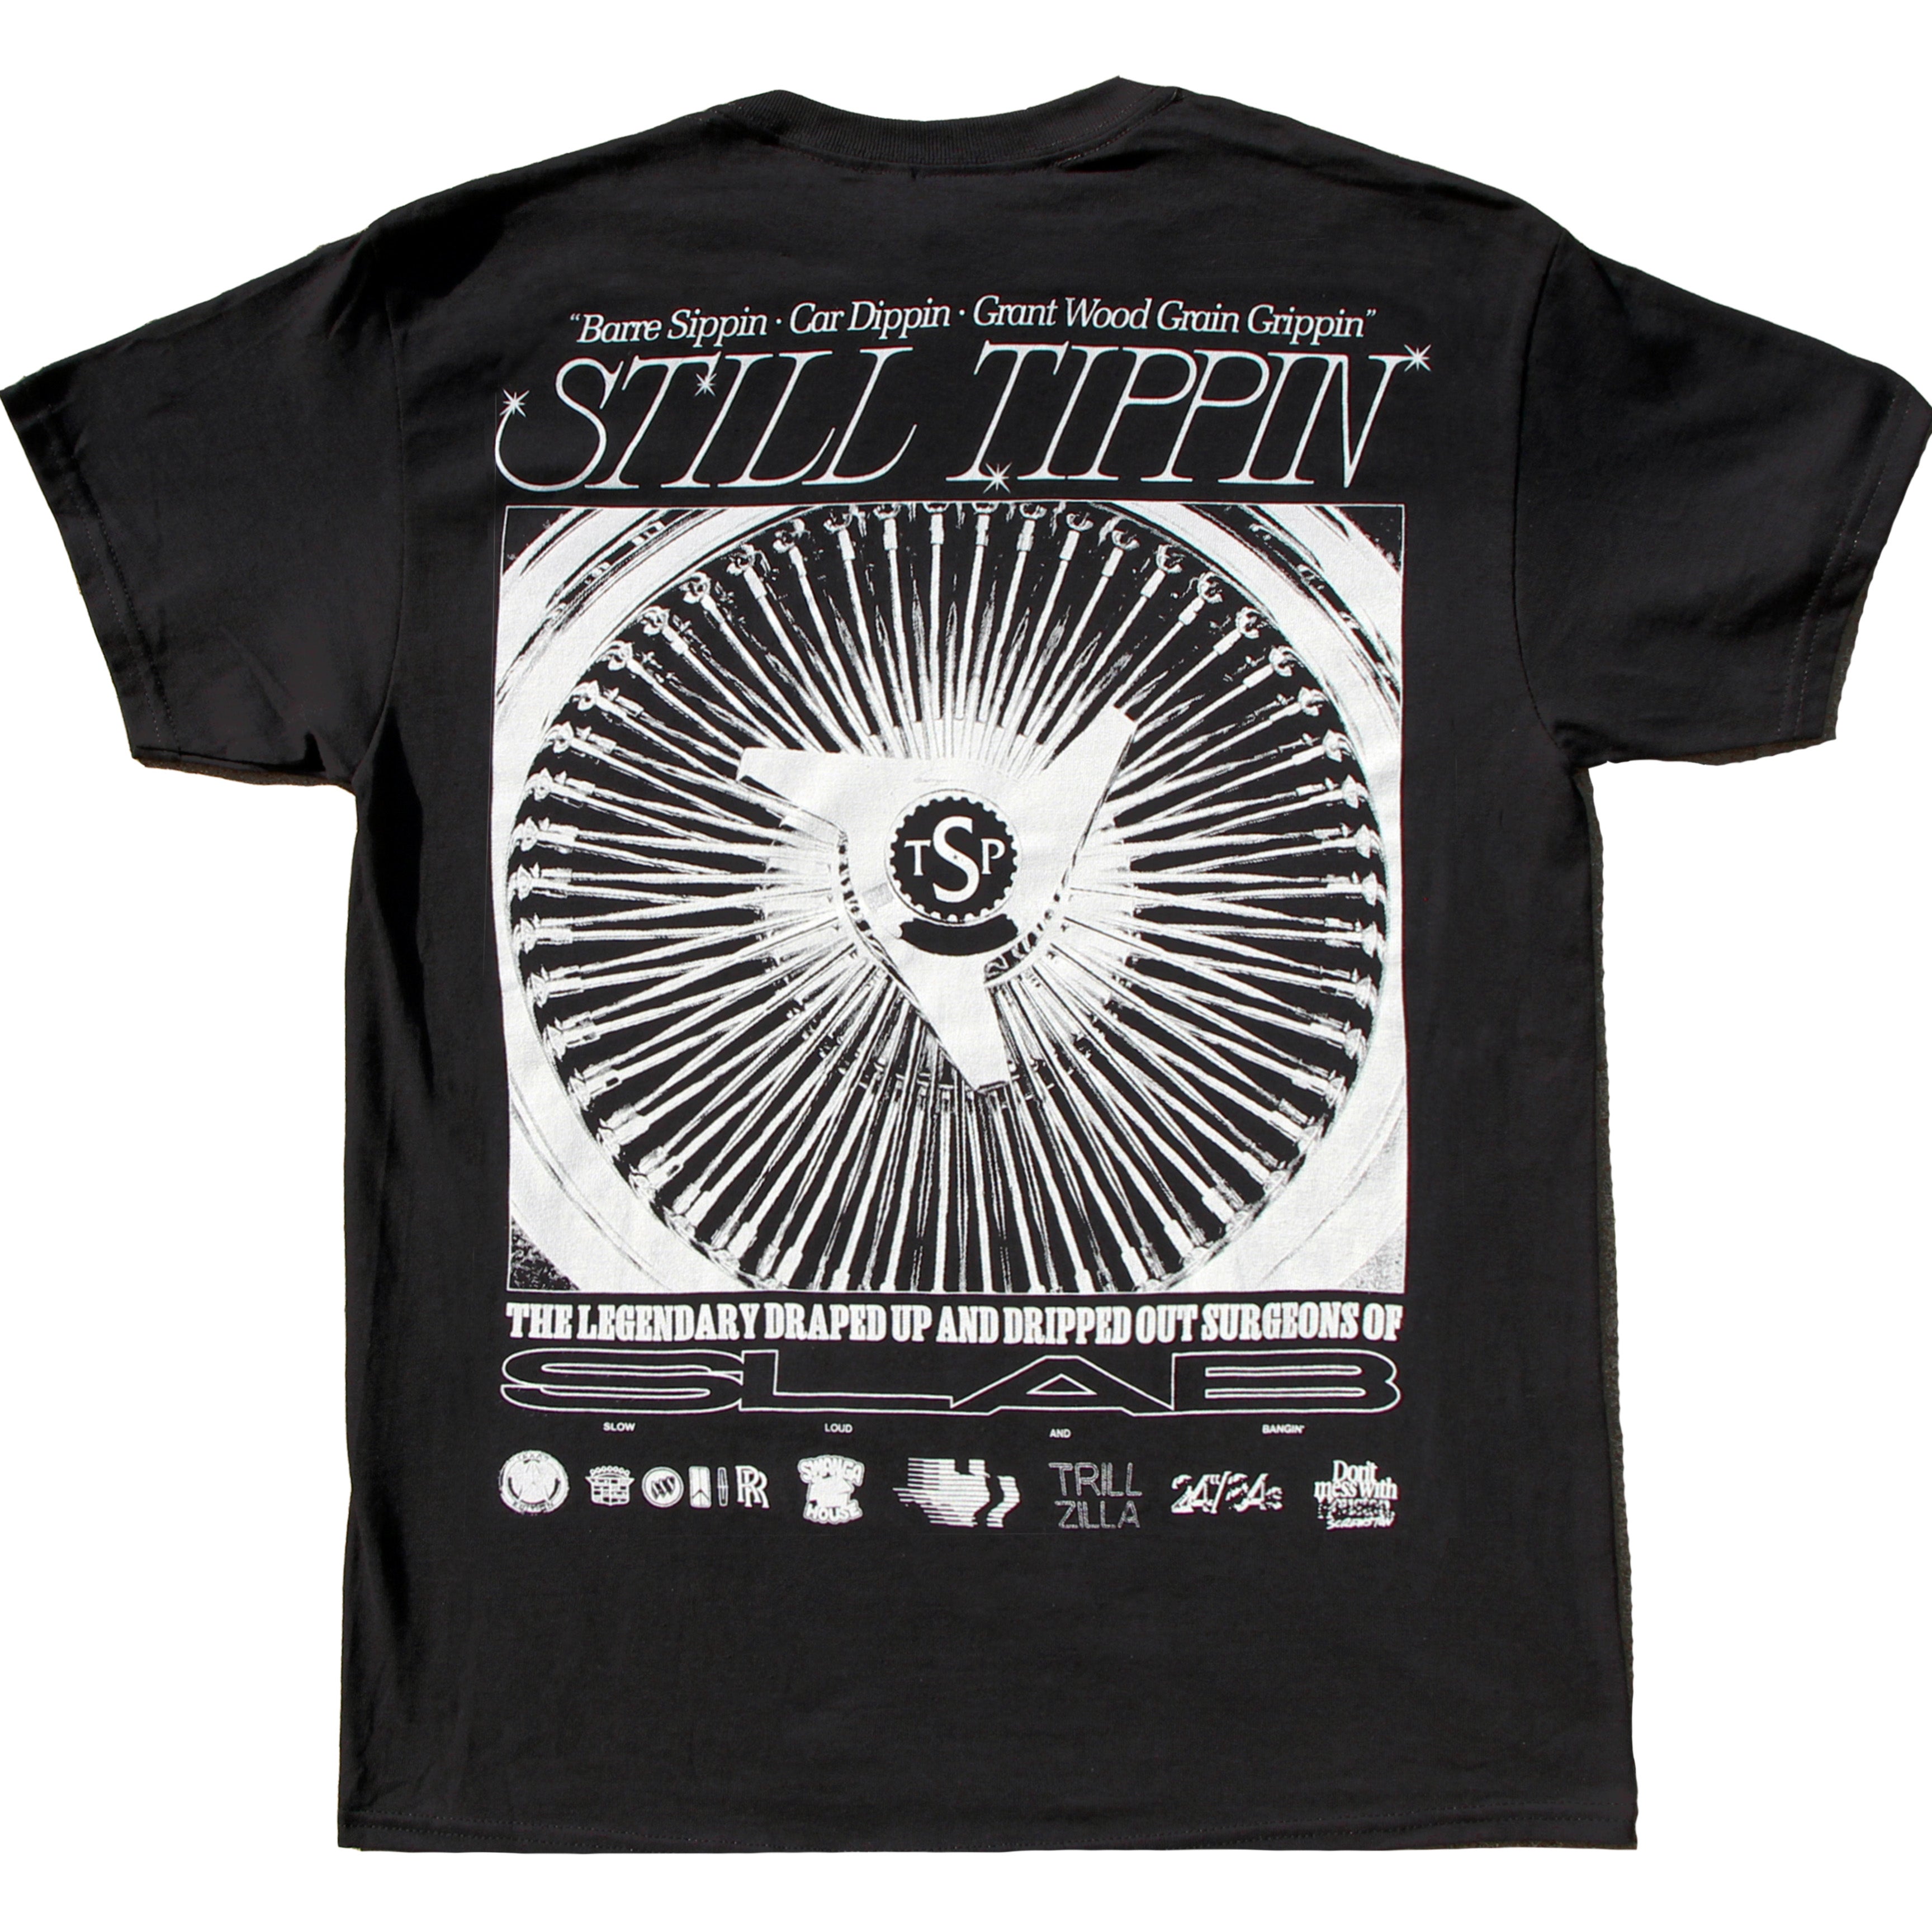 Still Tippin 2.0 Whells T-shirt On Sale